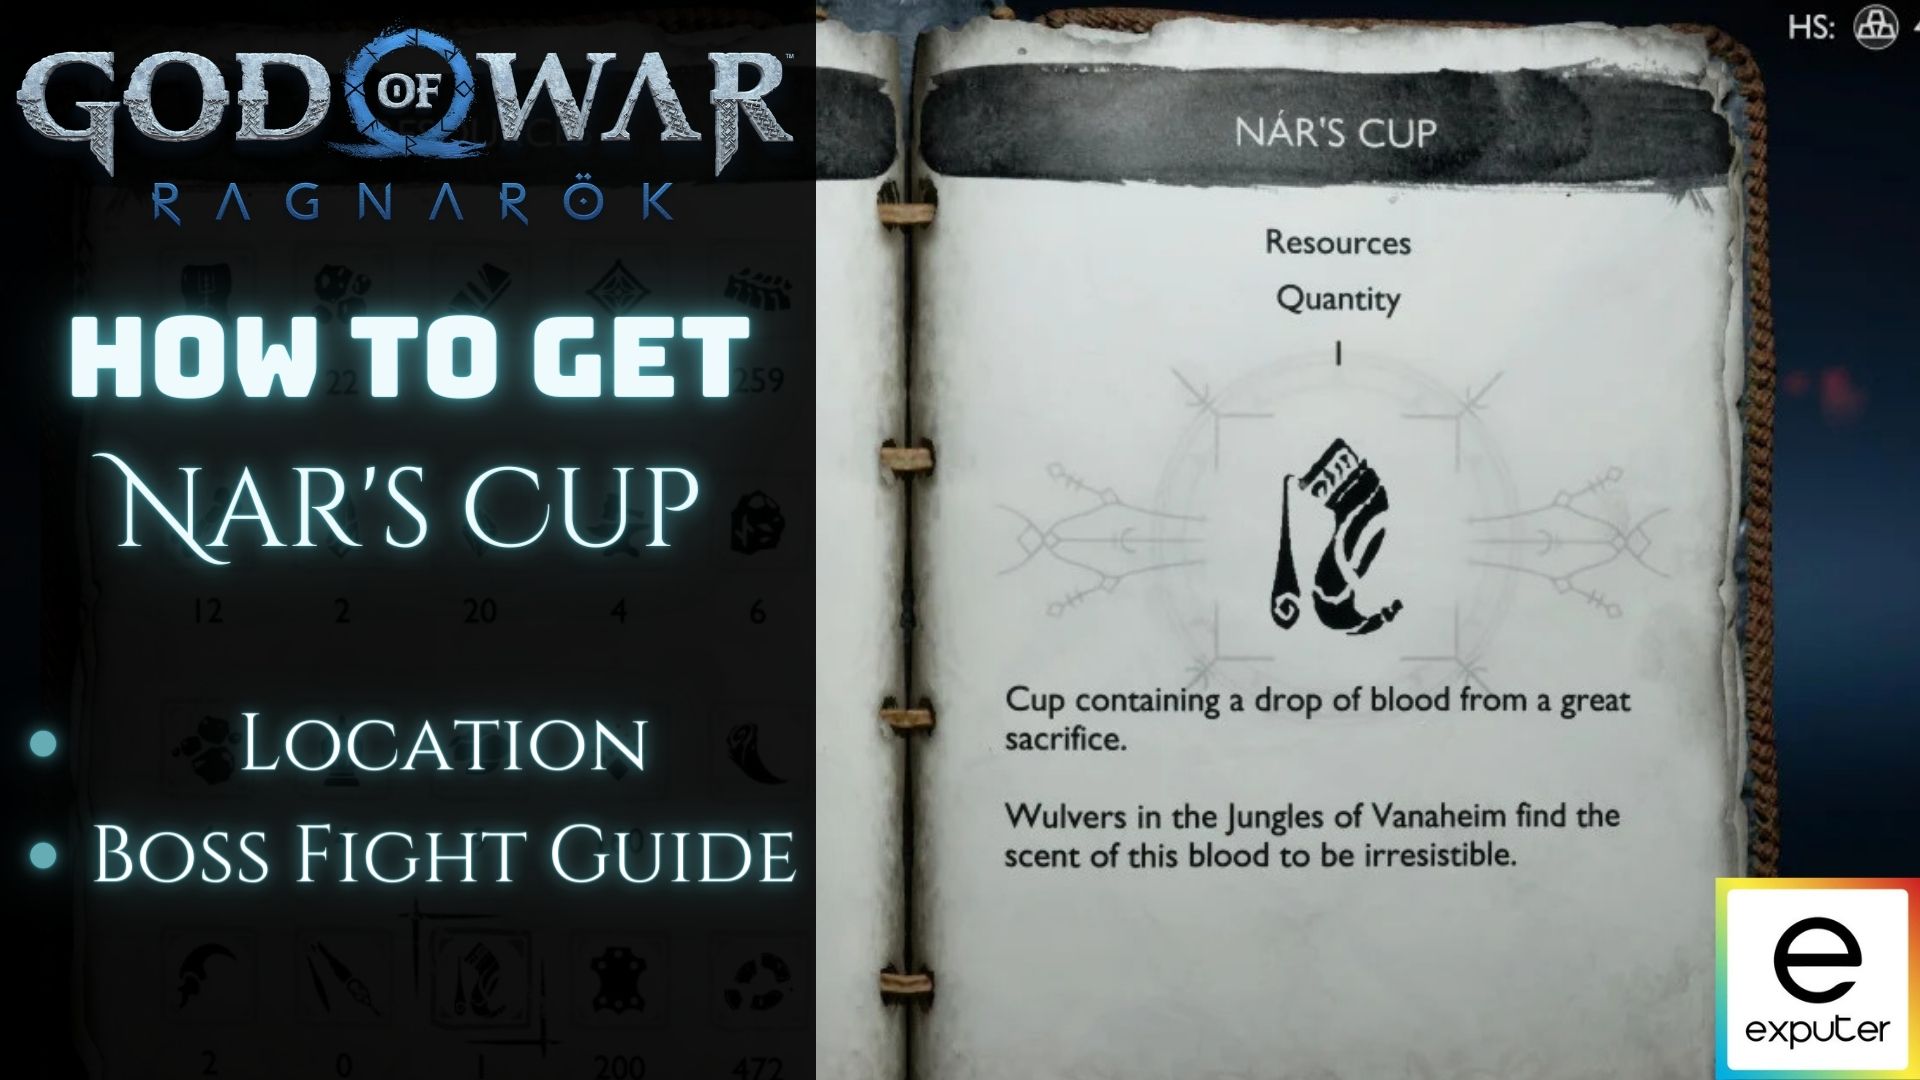 How to get nar's cup god of war ragnarok